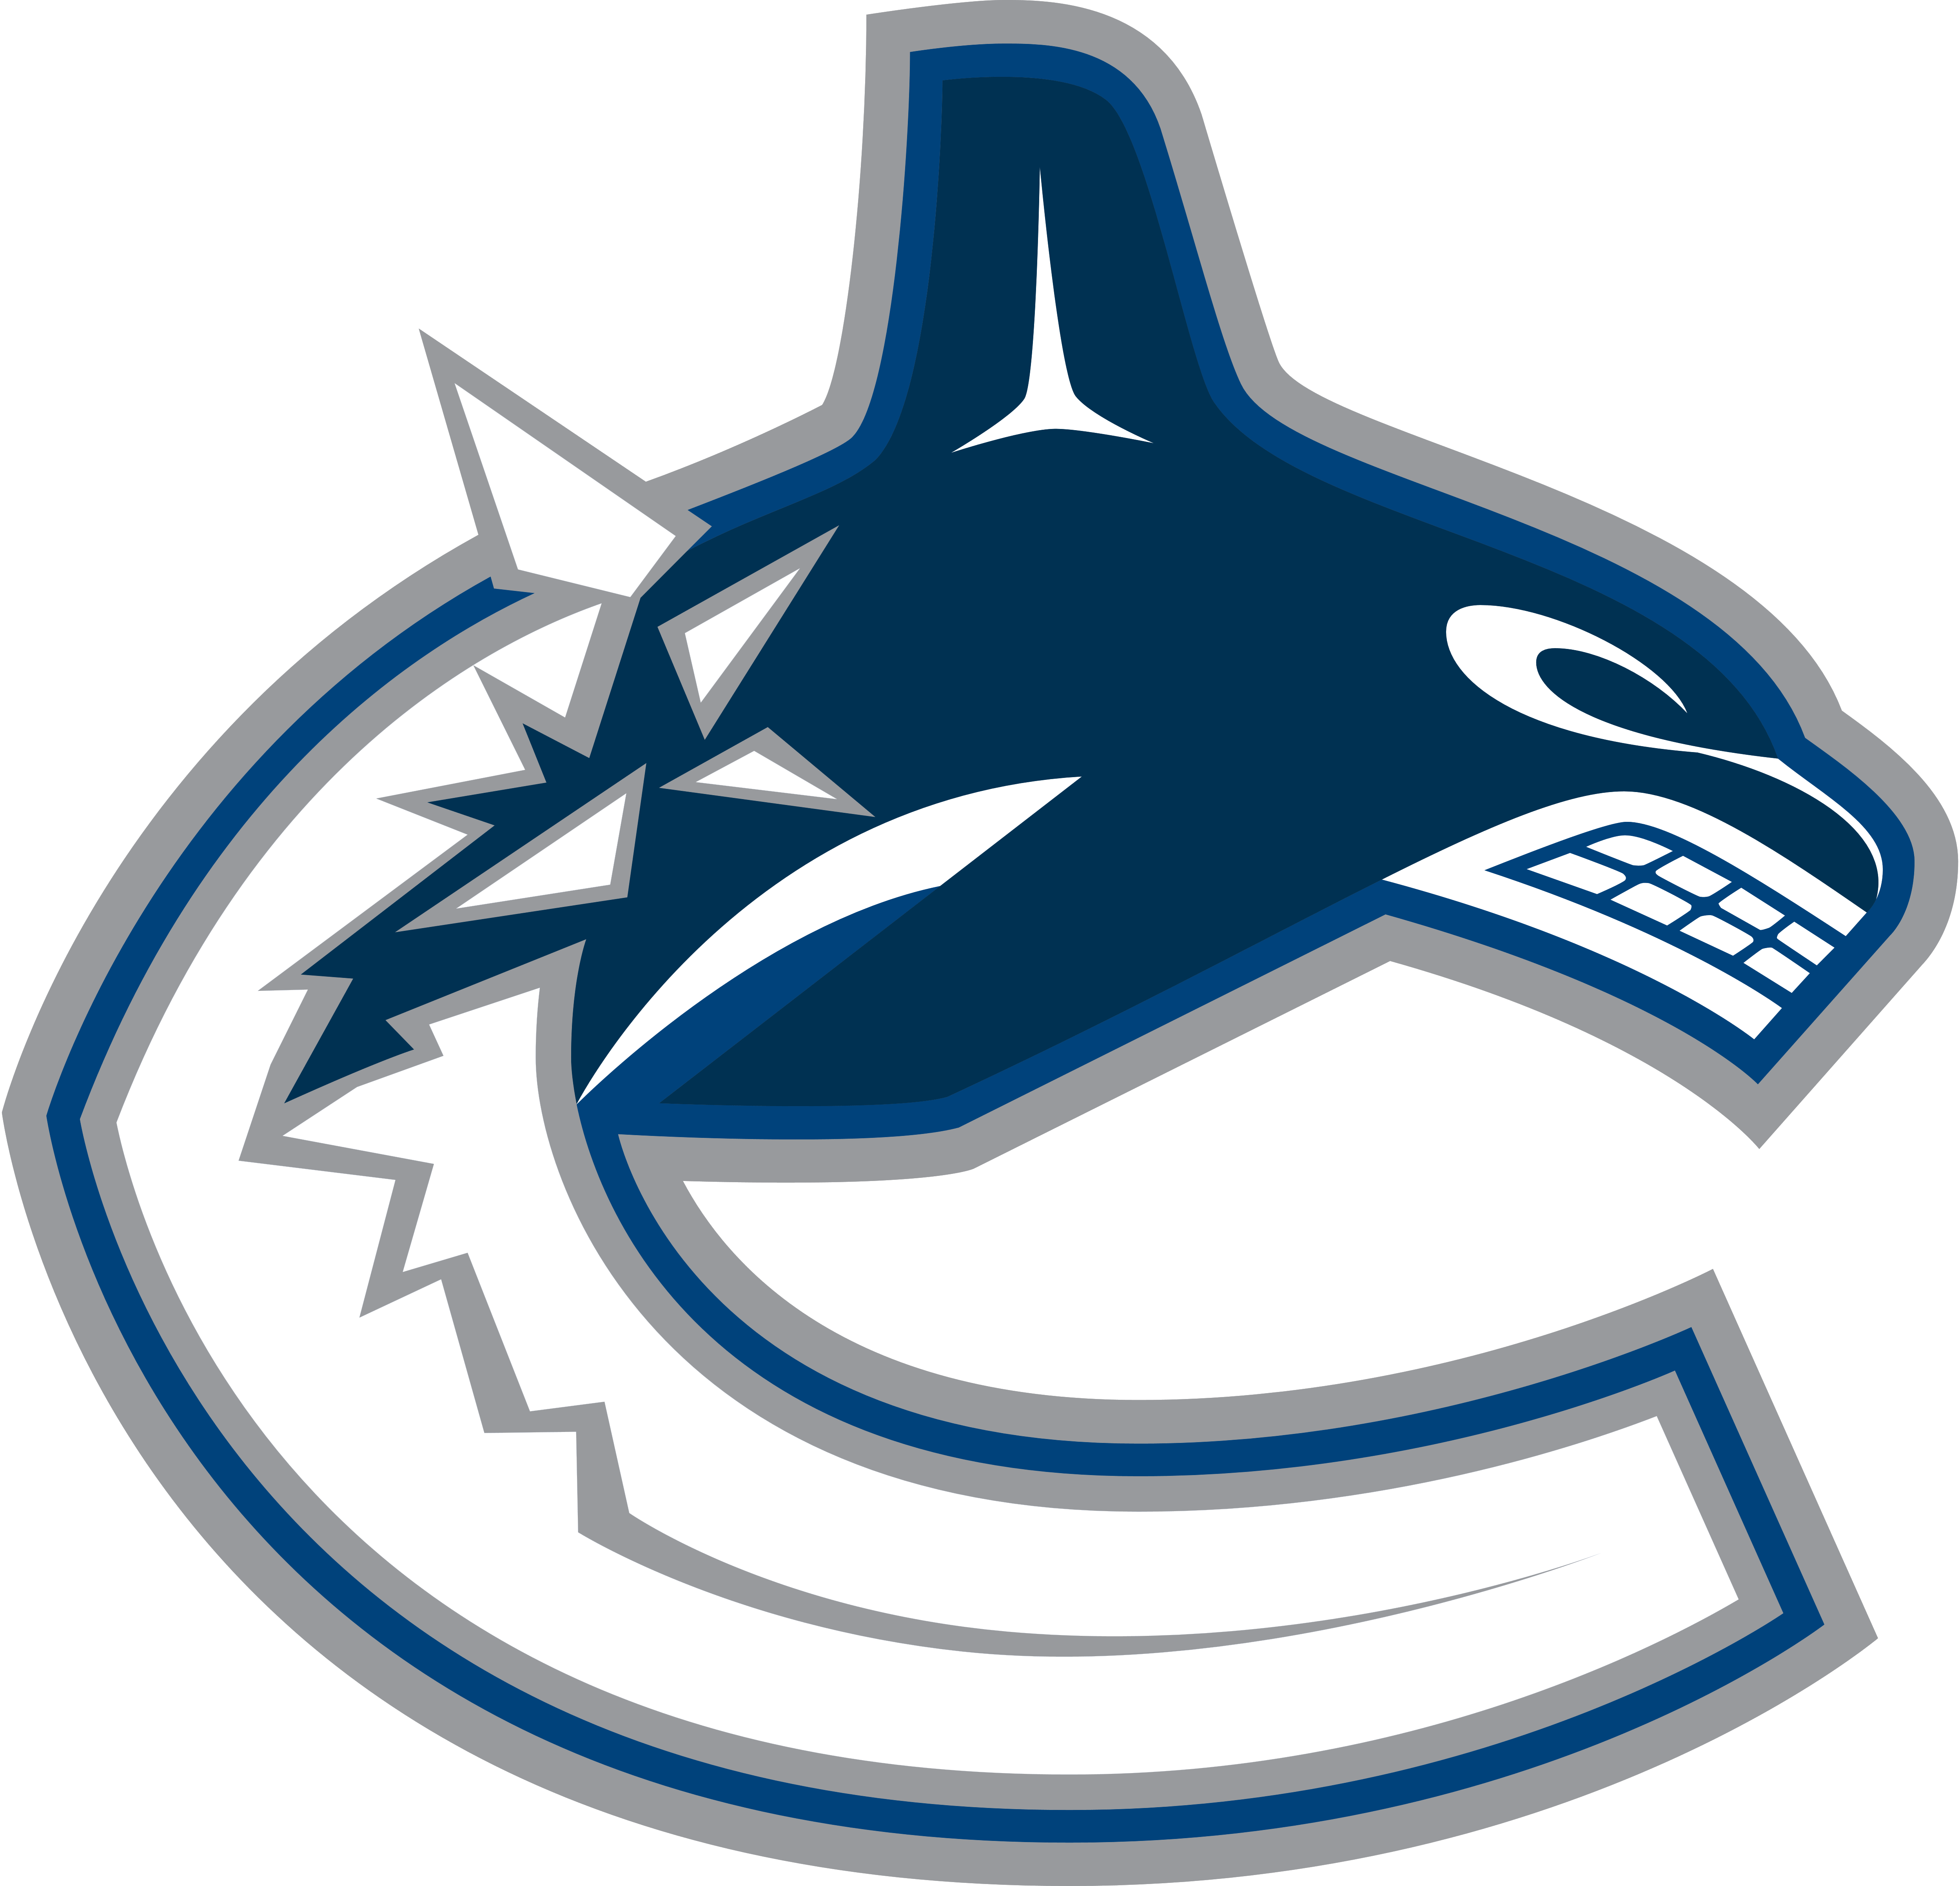 Логотипы команд нхл. Хоккейные команды НХЛ. Хоккейная команда NHL логотипы. Ванкувер Кэнакс логотип. НХЛ касатки команда.